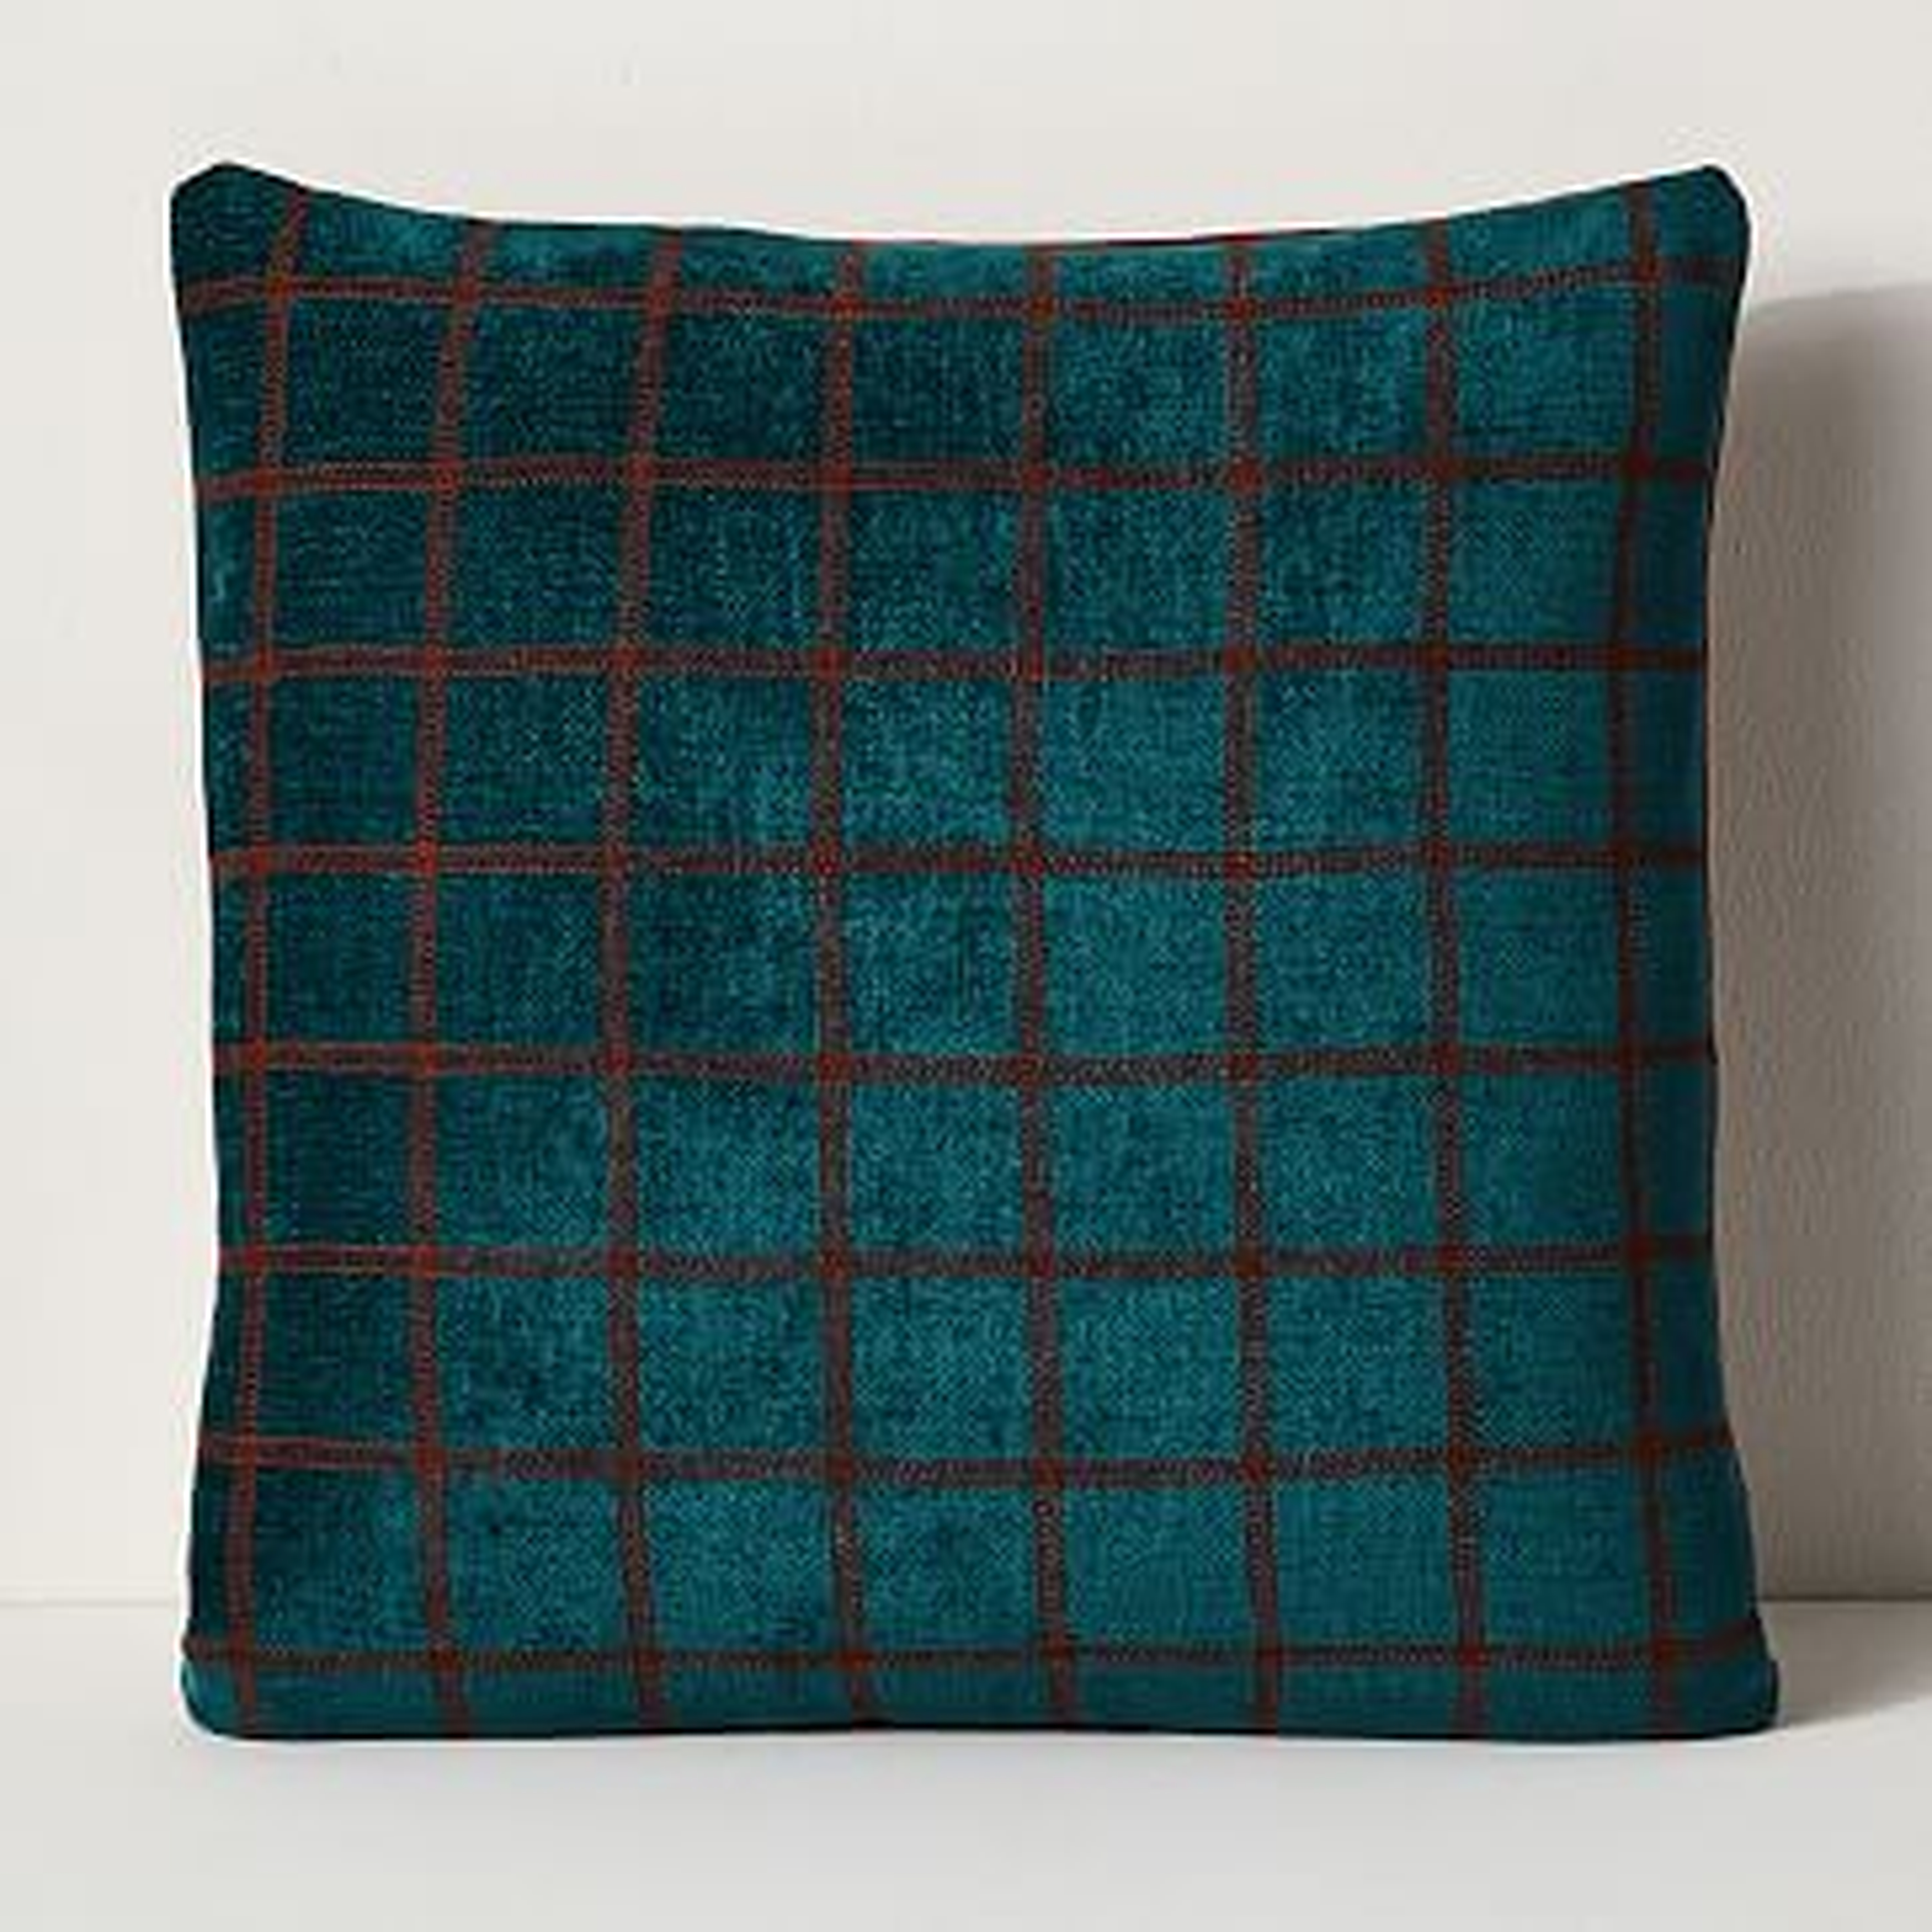 Aqua Stitched Grid Pillow - West Elm